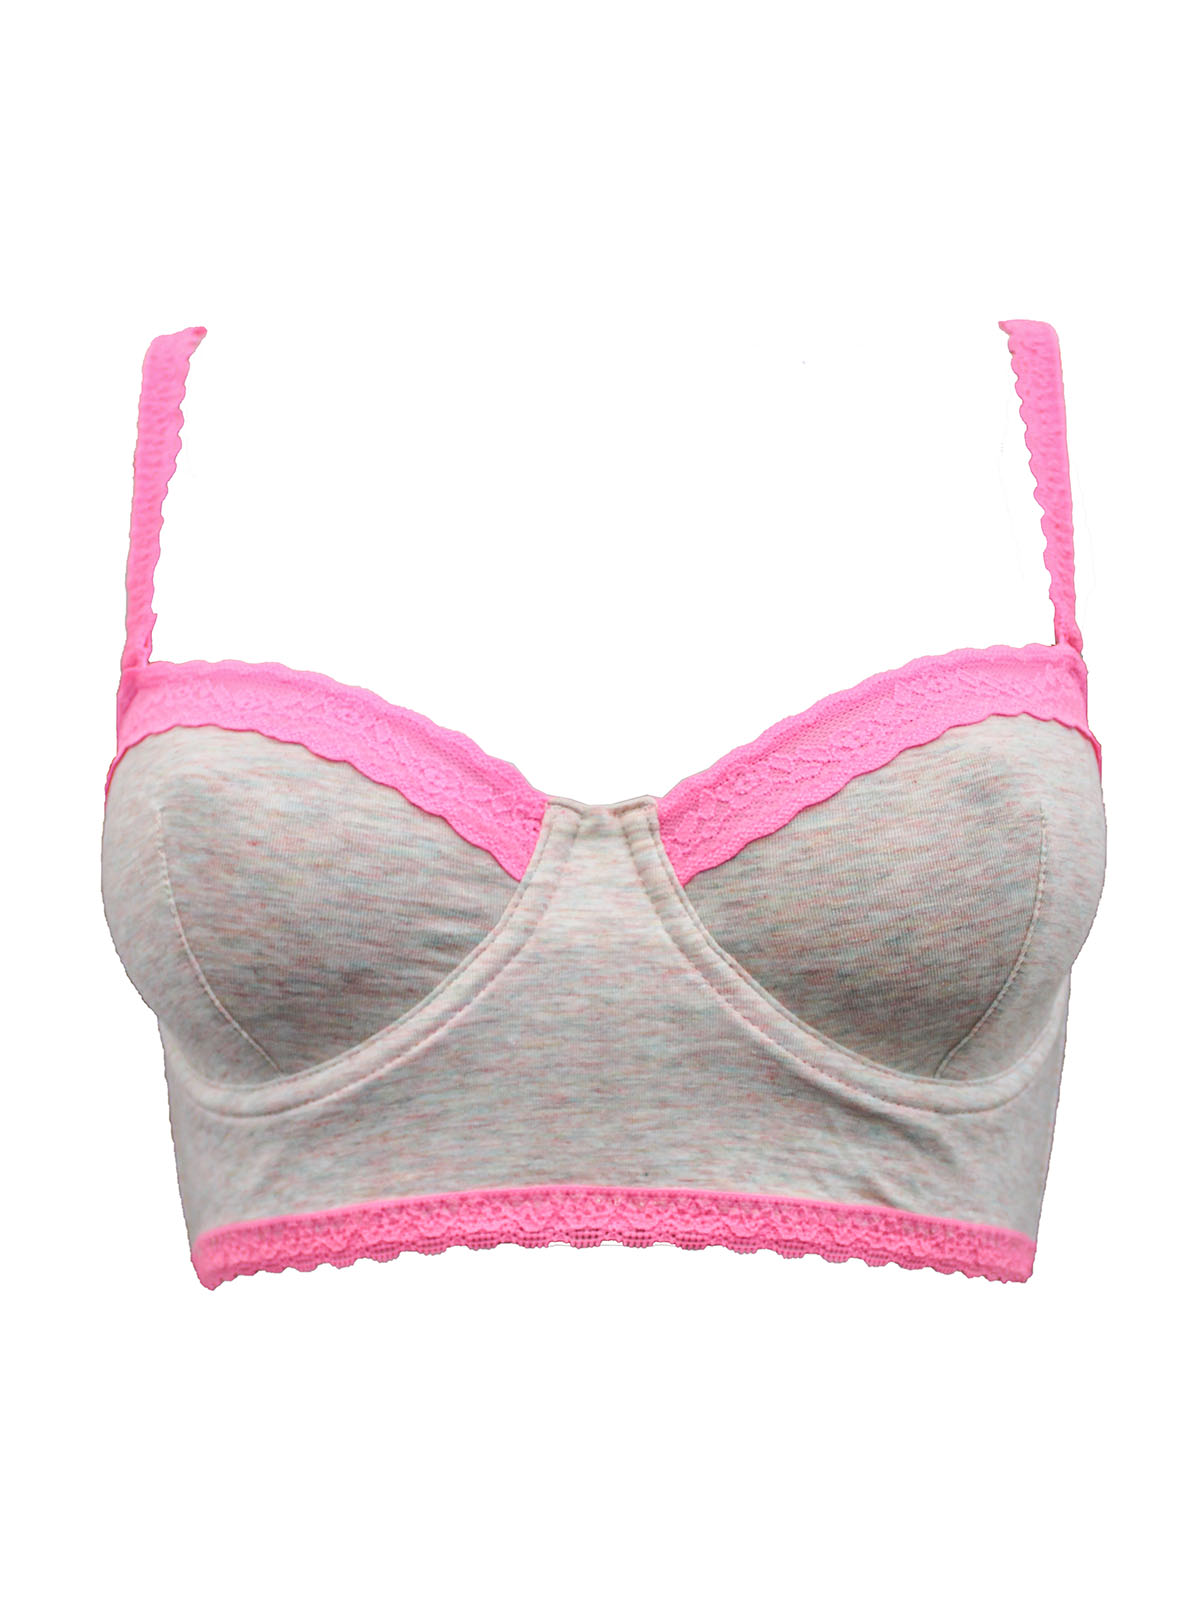 Victoria's Secret Pink Bra 36B - Gem